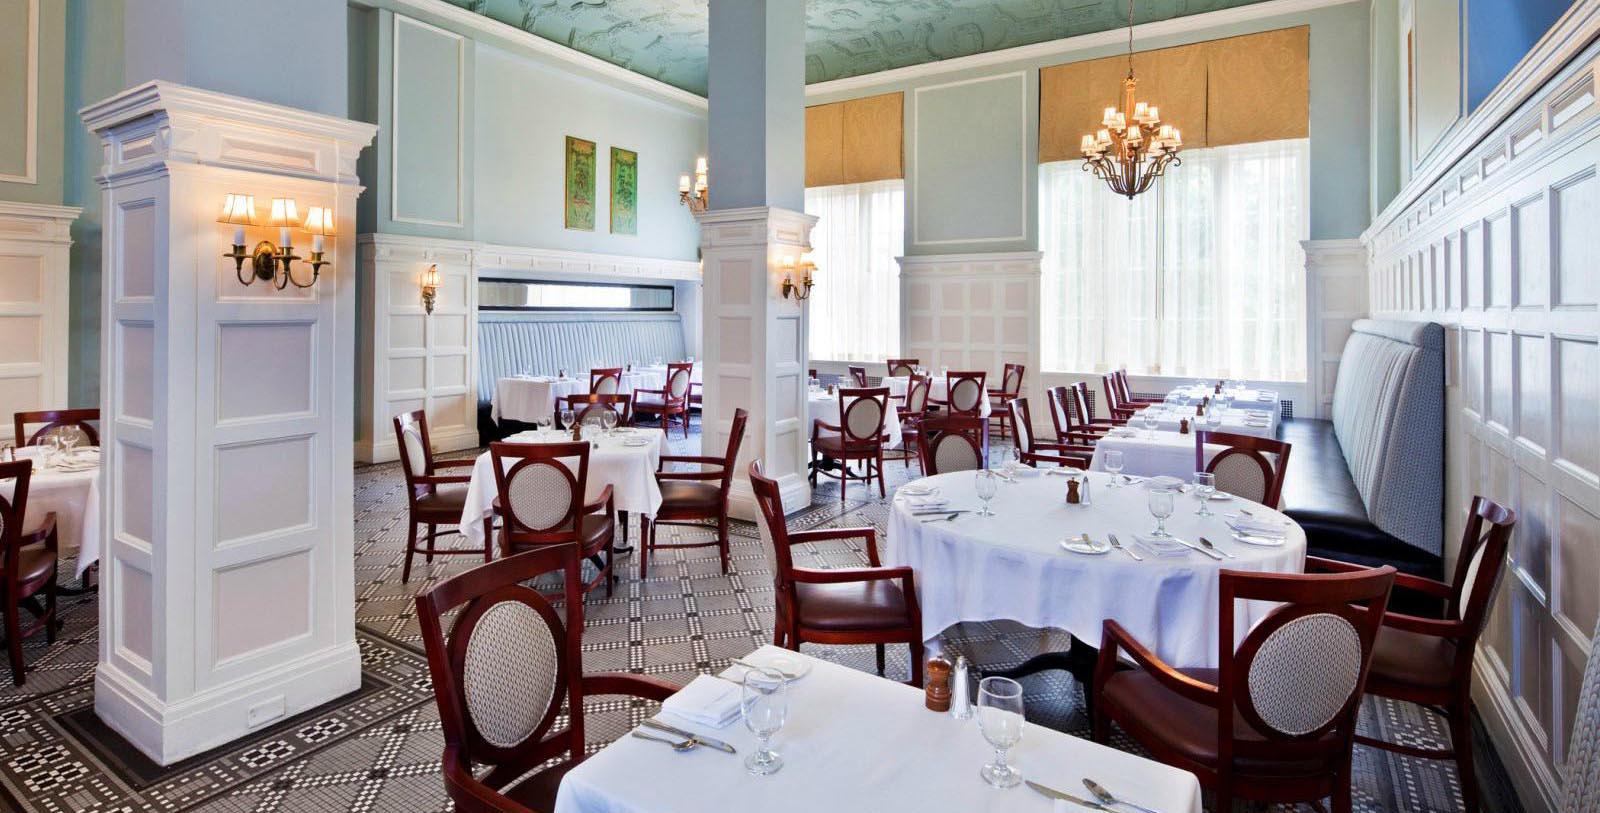 Image of Dining Room at Spoonbread Restaurant at The Westin Poinsett, 1925, Member of Historic Hotels of America, in Greenville, South Carolina, Taste